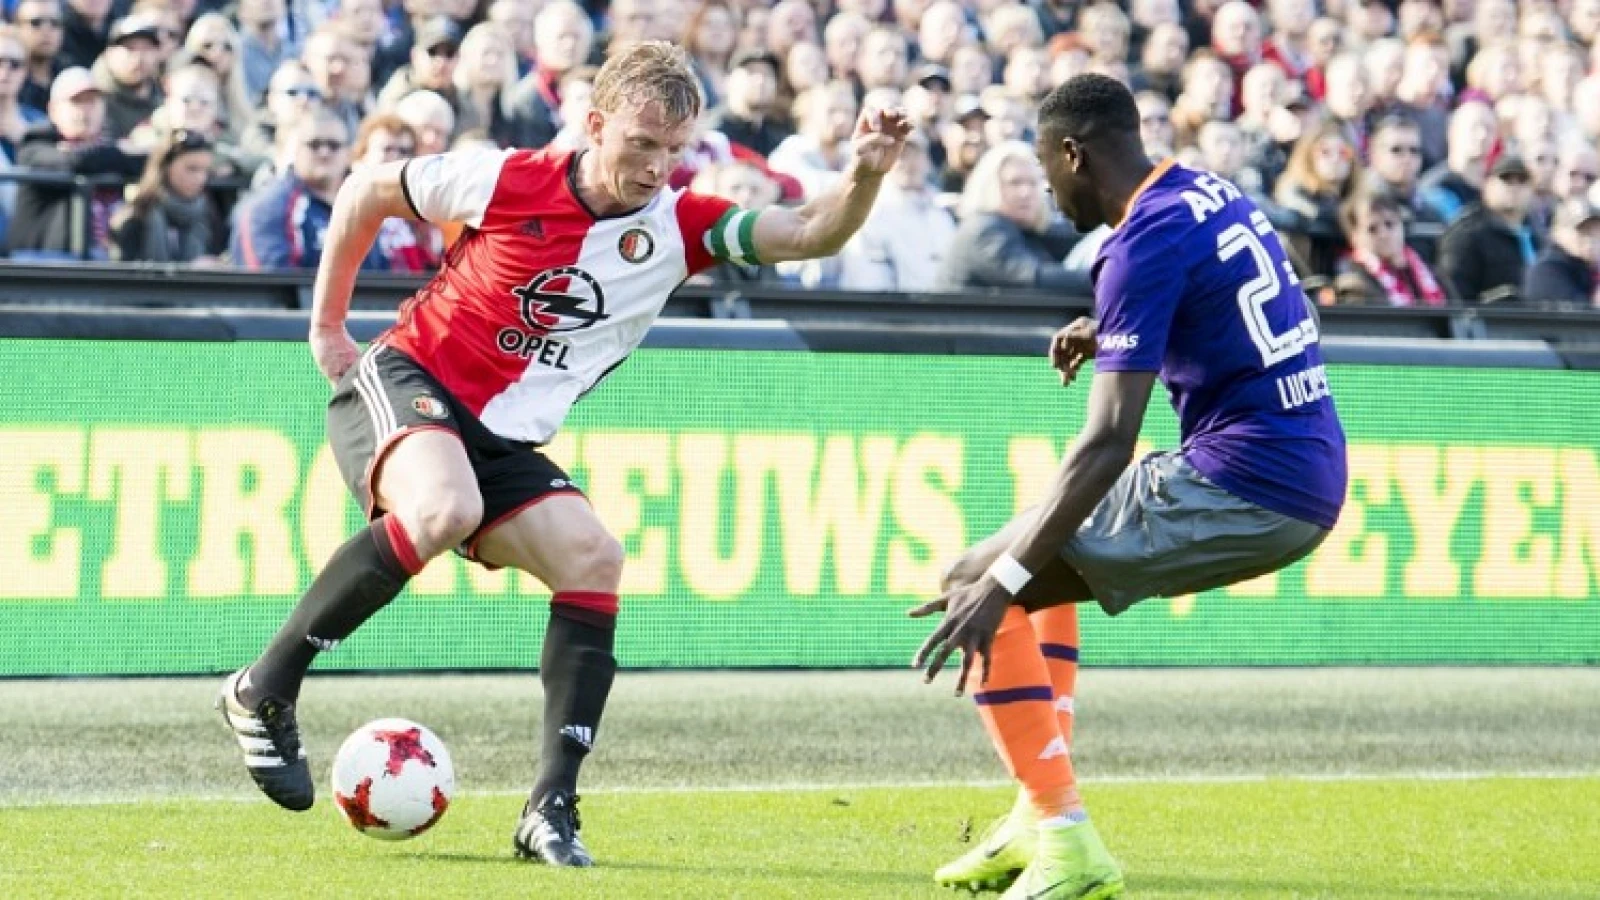 LIVE | Feyenoord - AZ 5-2 | Einde wedstrijd